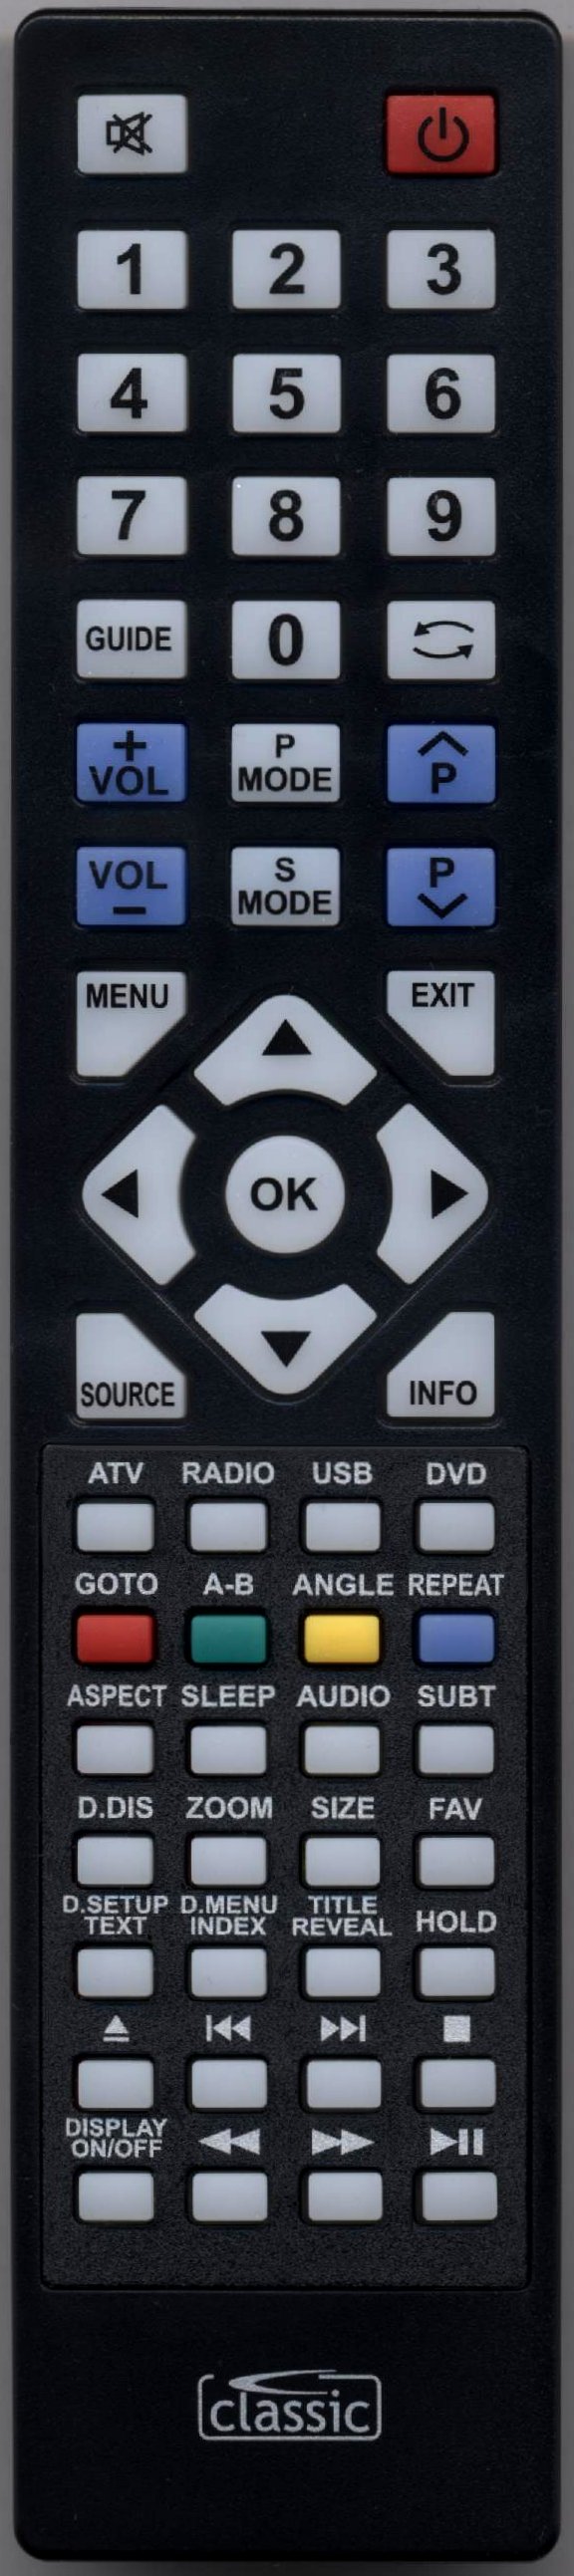 UMC X32/56G Remote Control Alternative